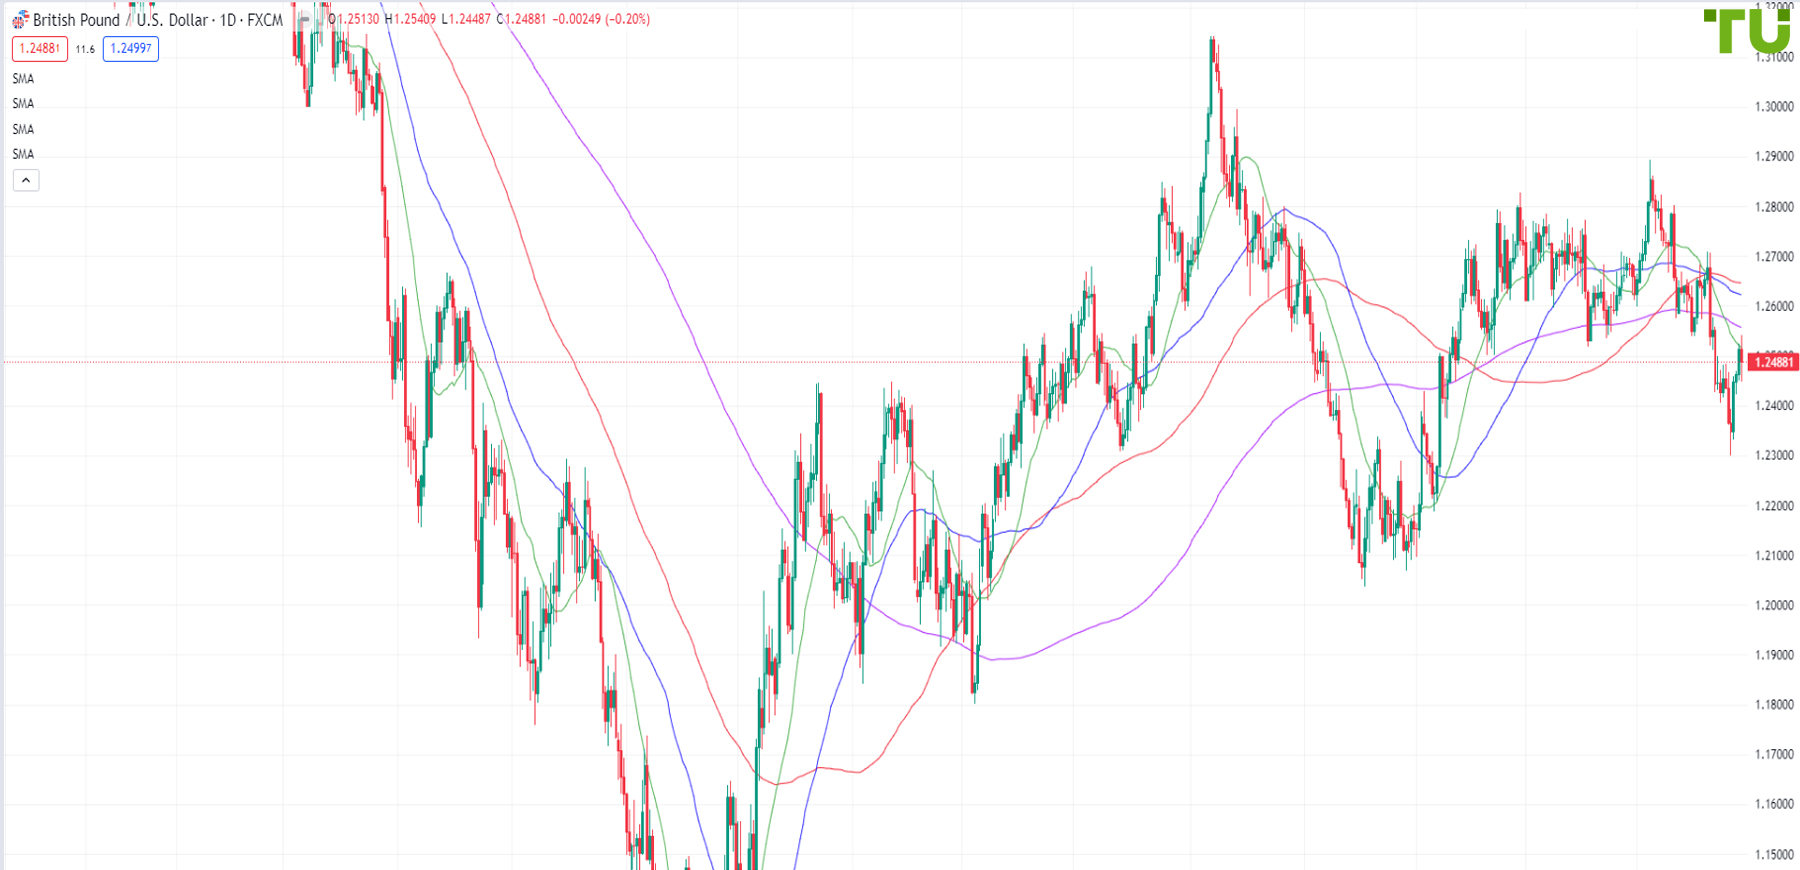 GBP/USD is under selling pressure